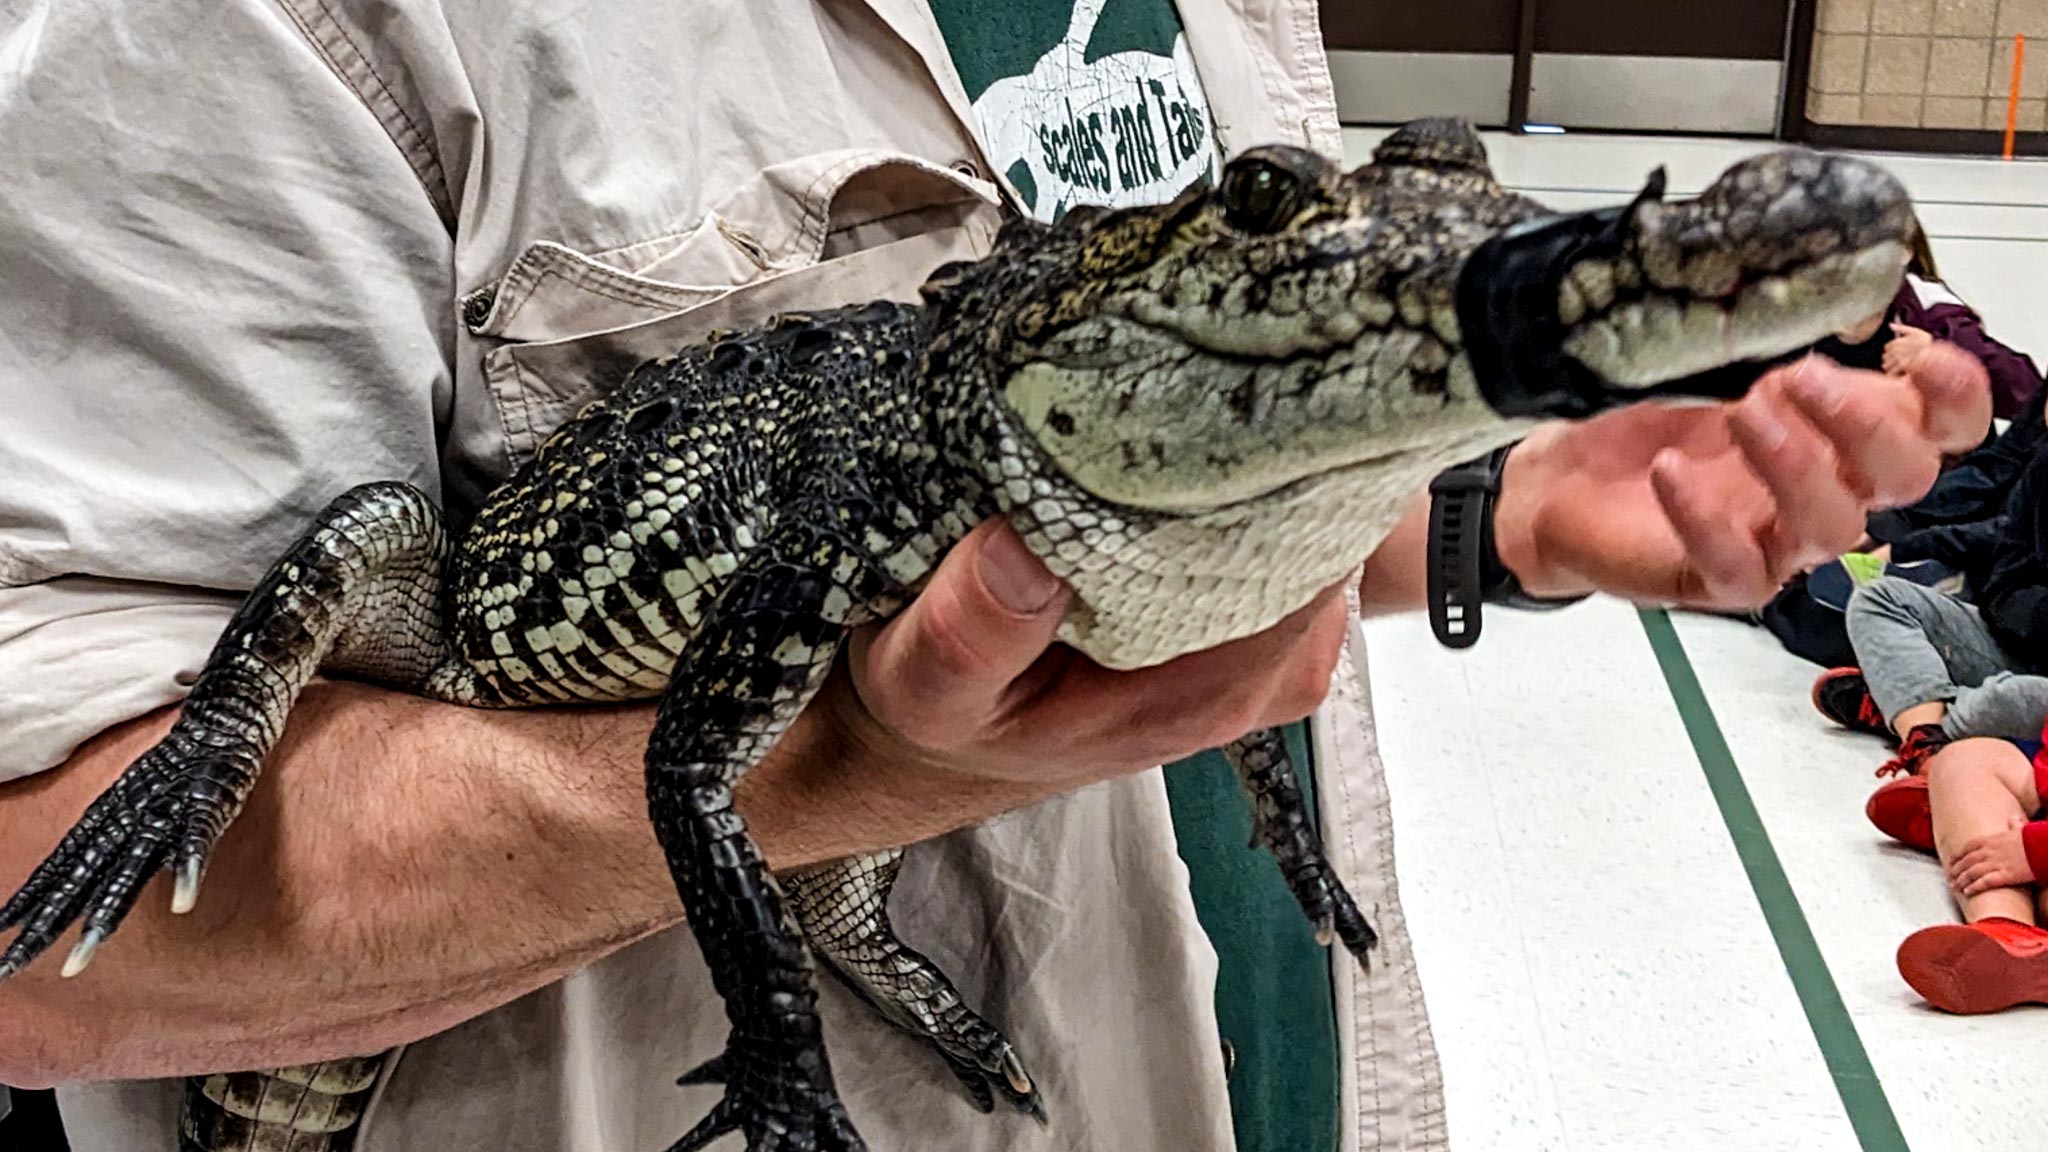 Man holding alligator.